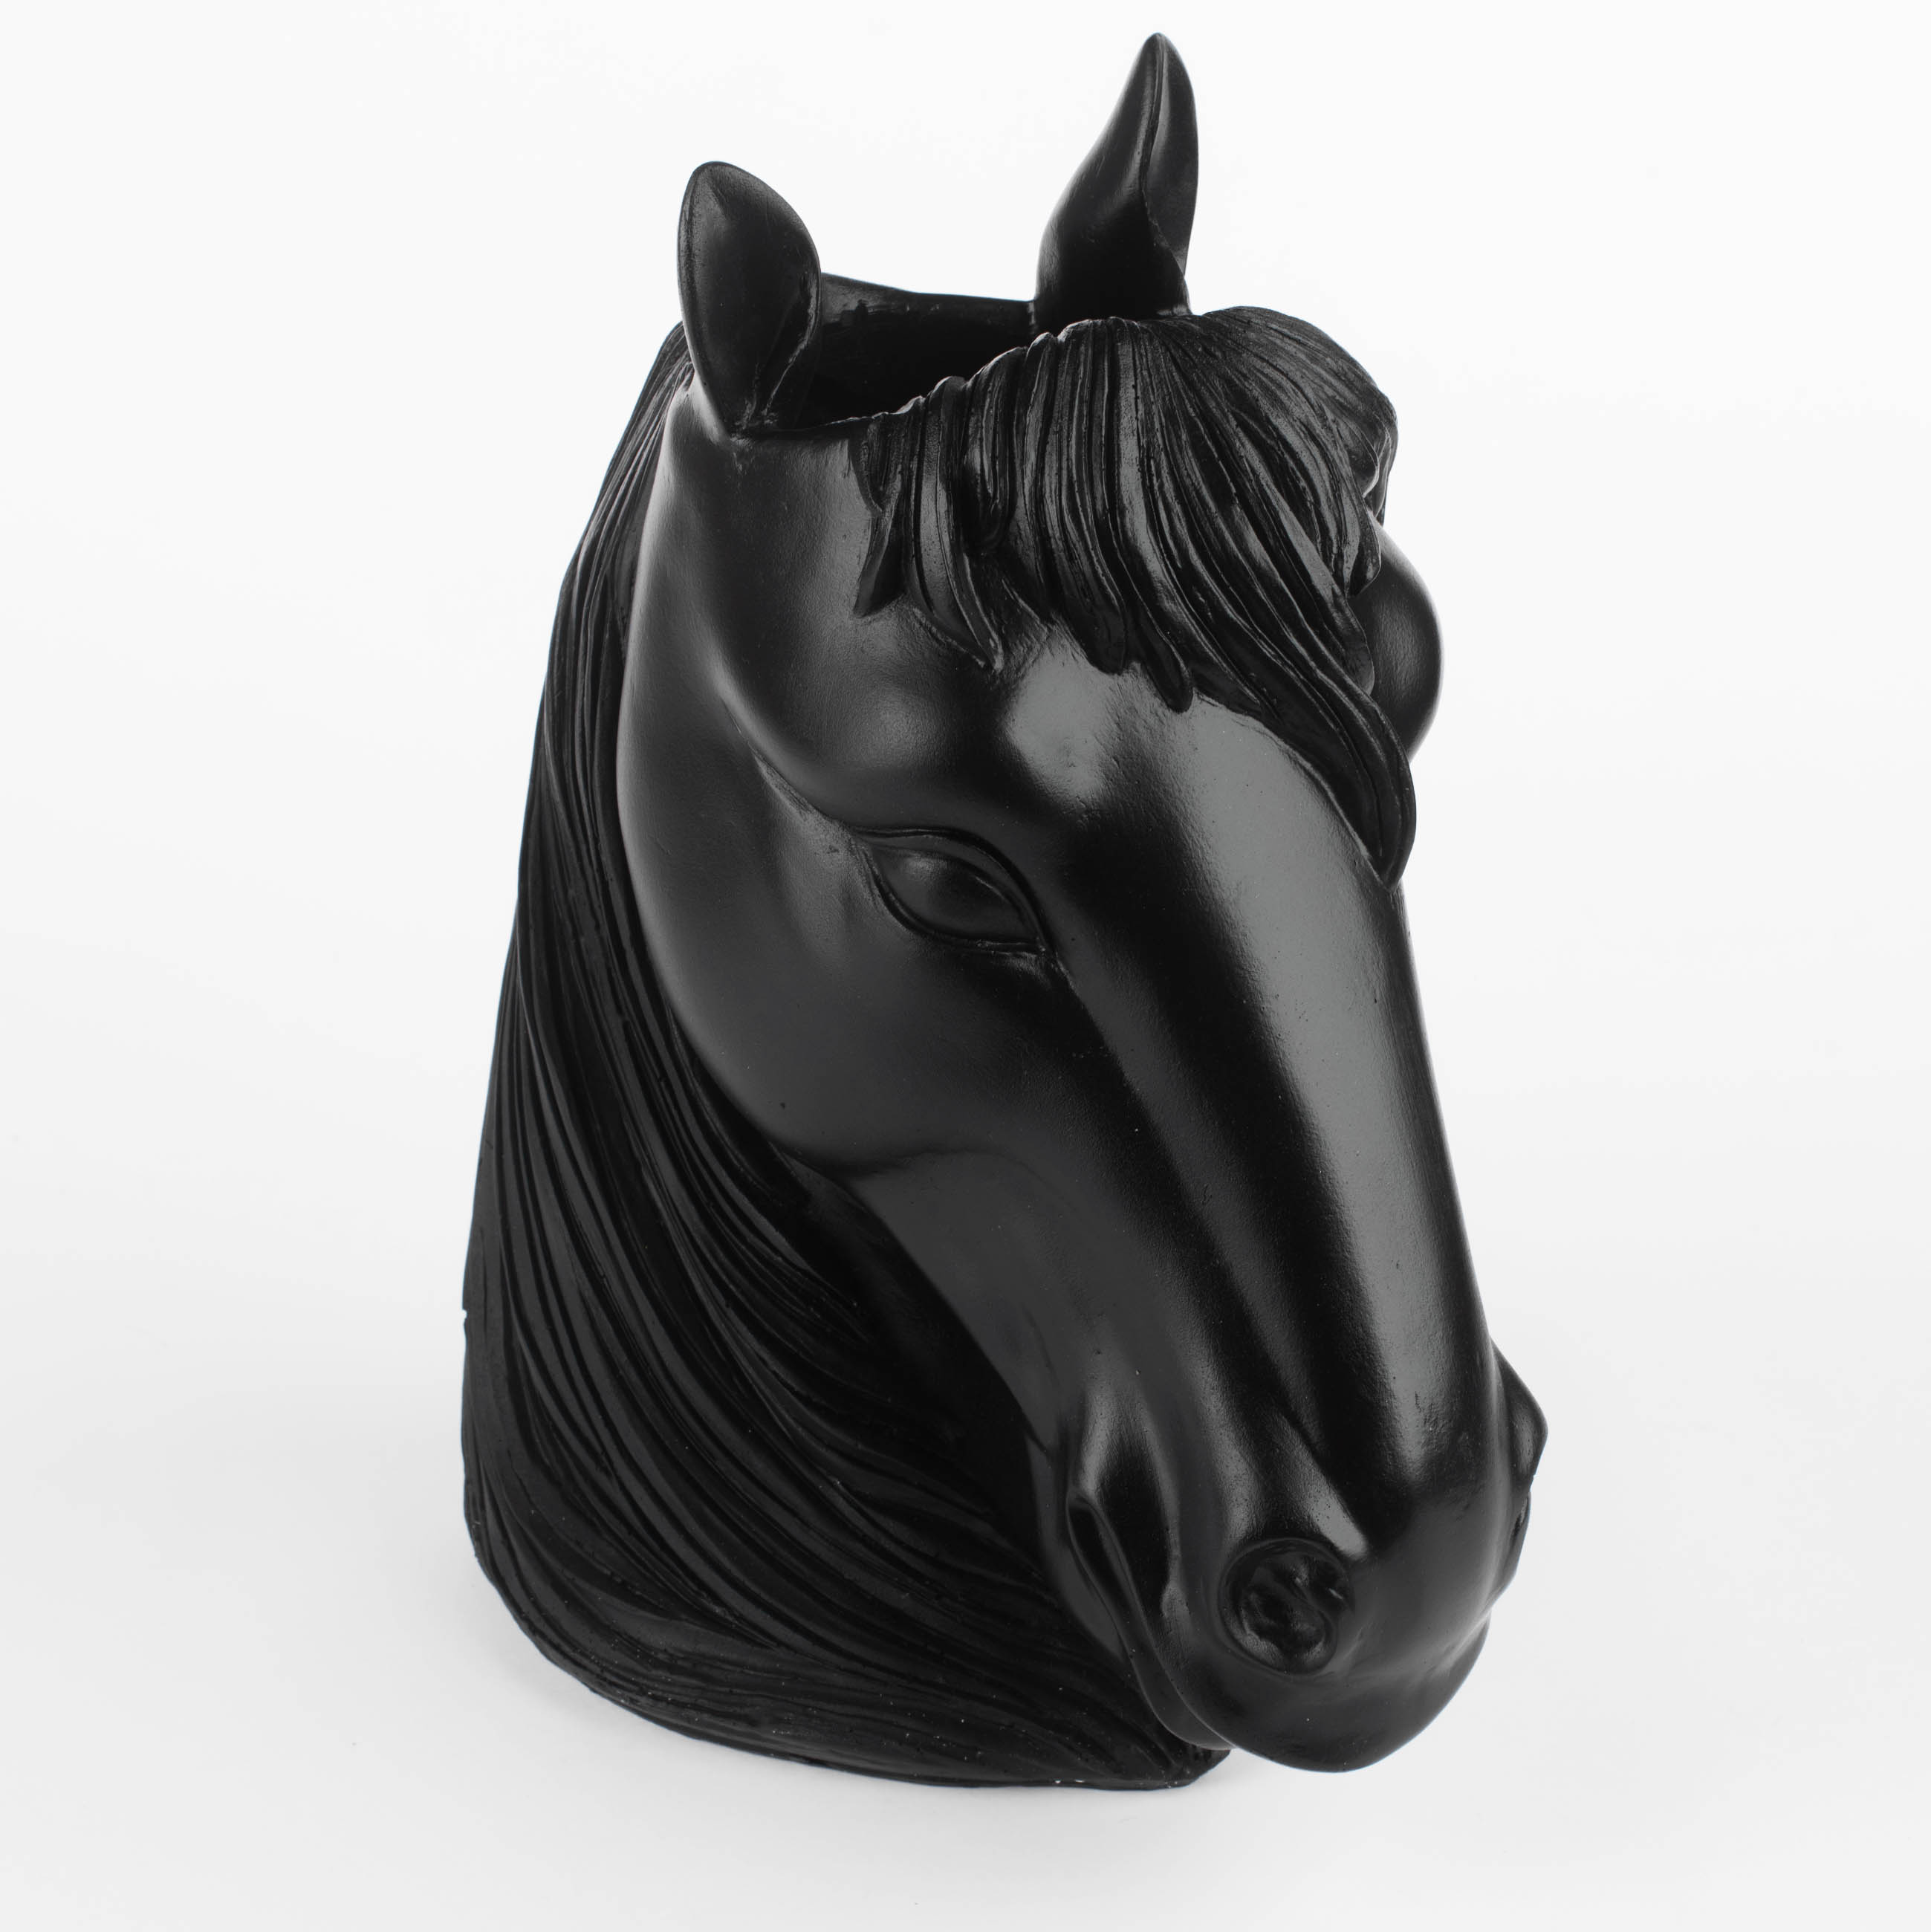 Decorative vase, 25 cm, polyresin, black, Horse head, Horse изображение № 3